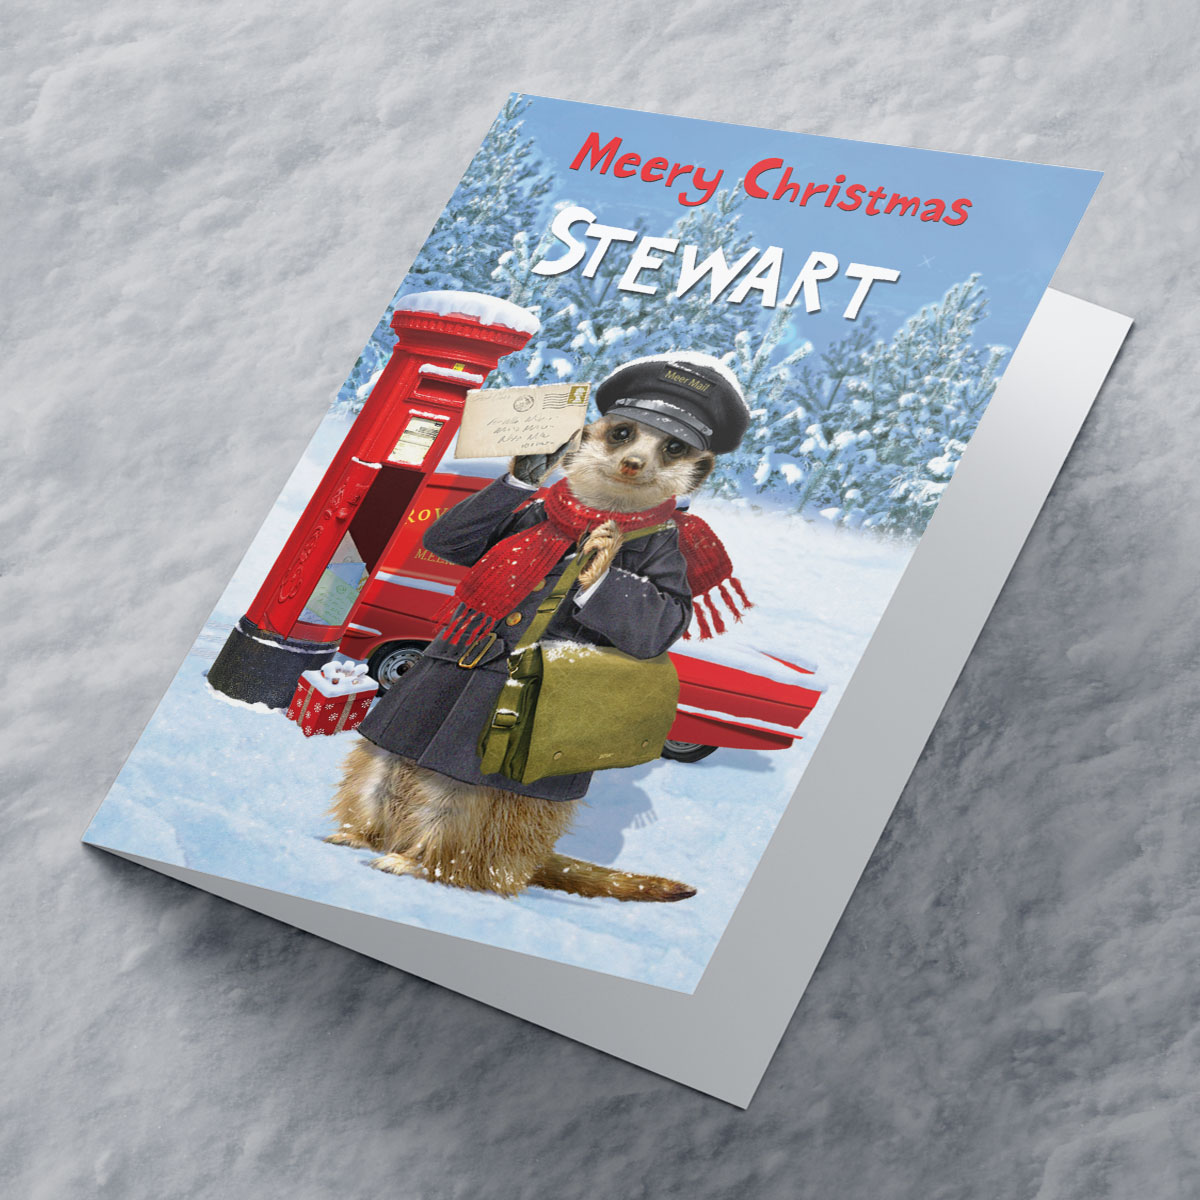 Personalised Christmas Card - Meery Christmas